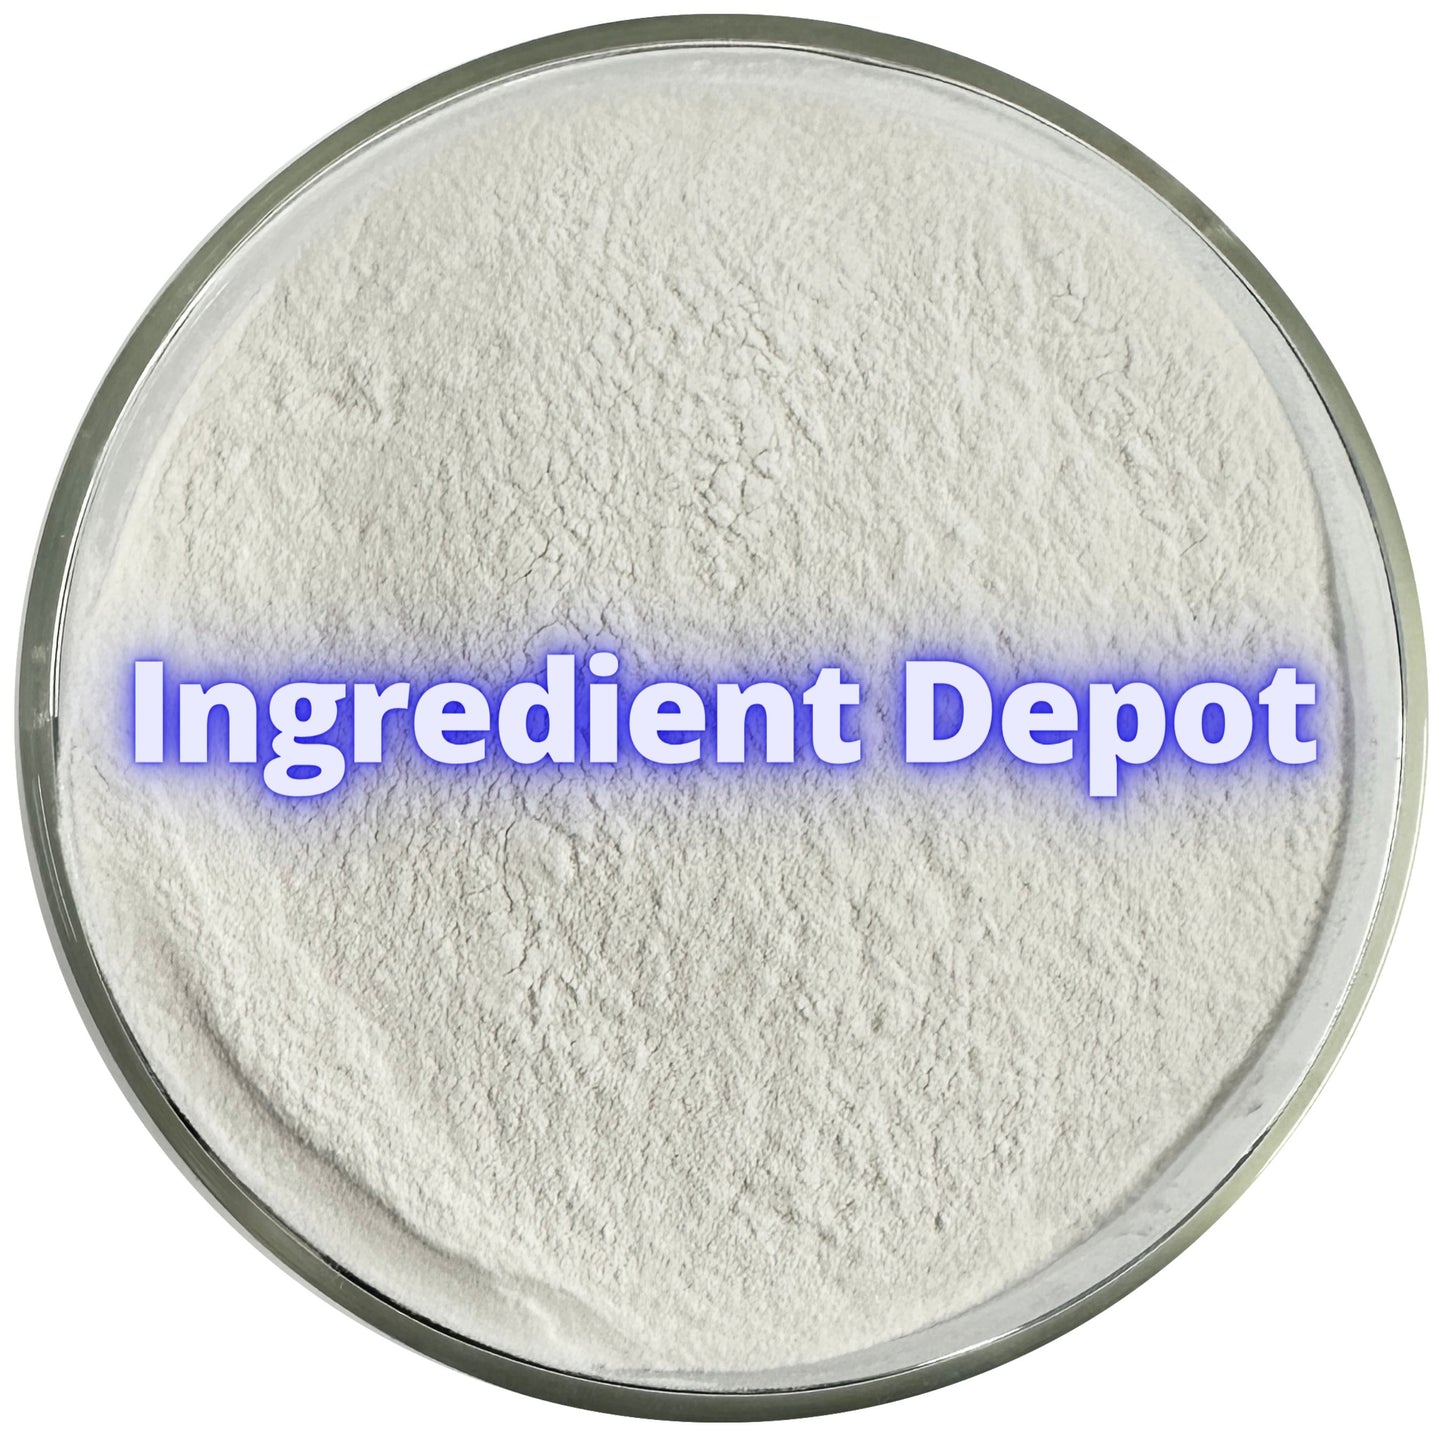 Crosscarmellose Sodium CCS - NF/USP/EP Grade 7 kgs - Ingredient Depot